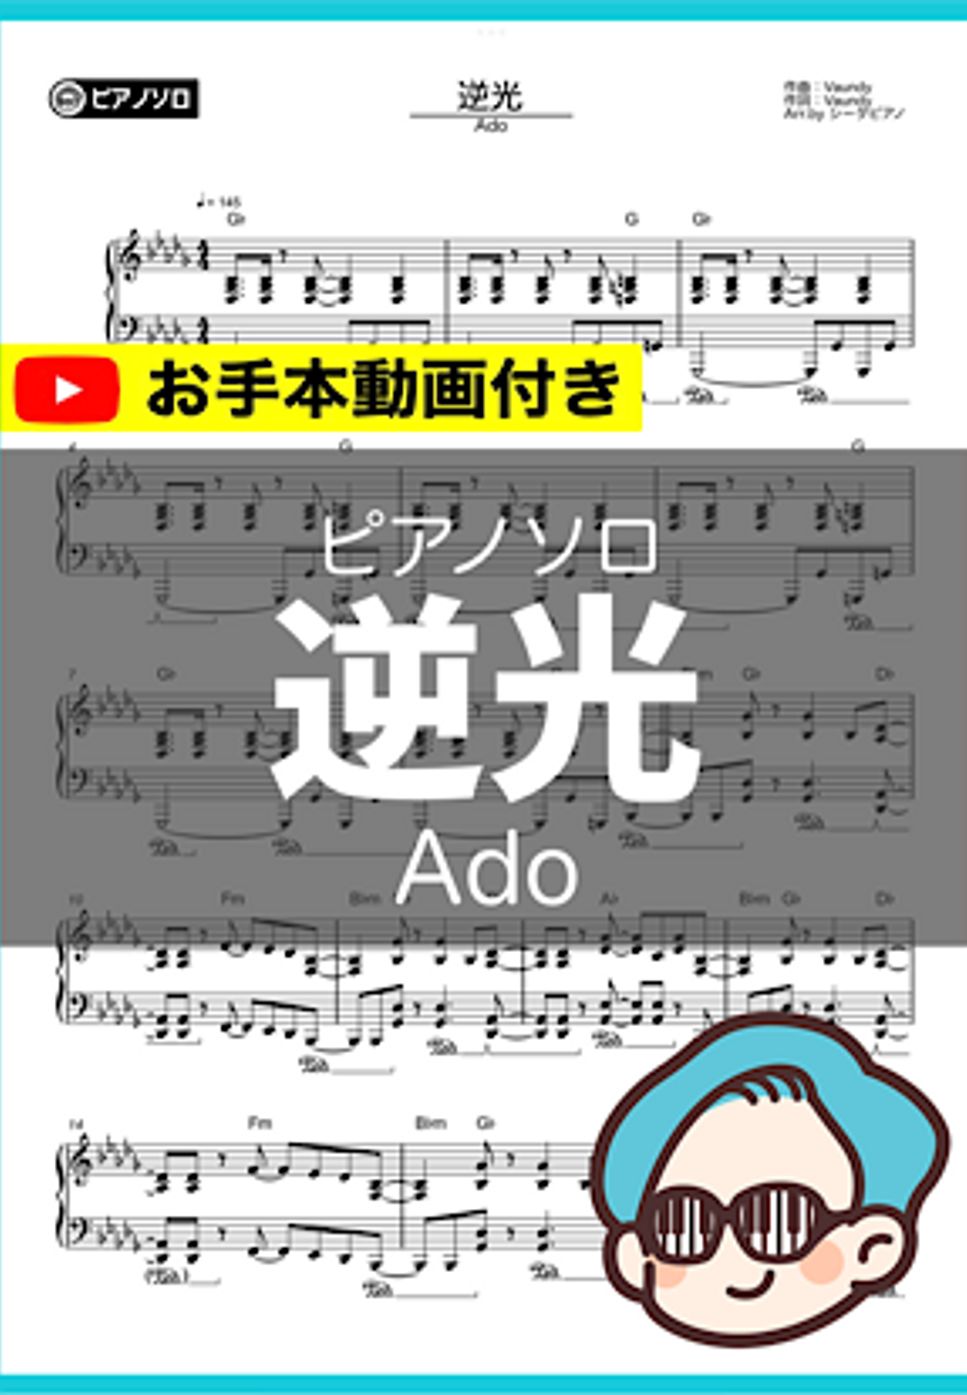 Ado - 逆光 by シータピアノ